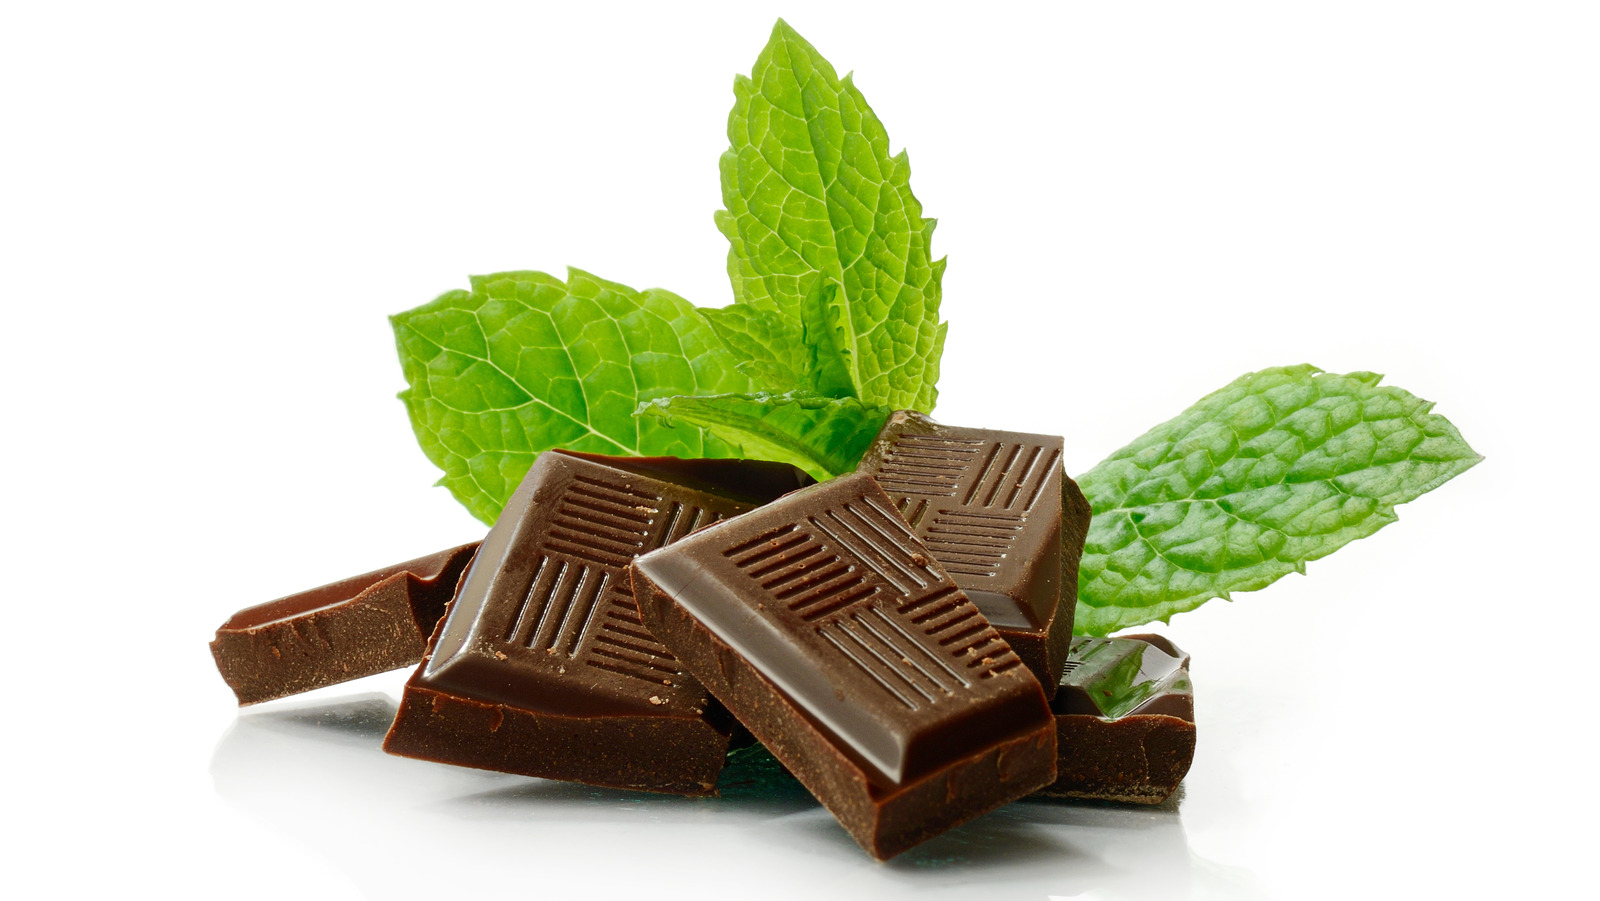 REVIEW: Kit Kat DUOS Mint + Dark Chocolate - The Impulsive Buy